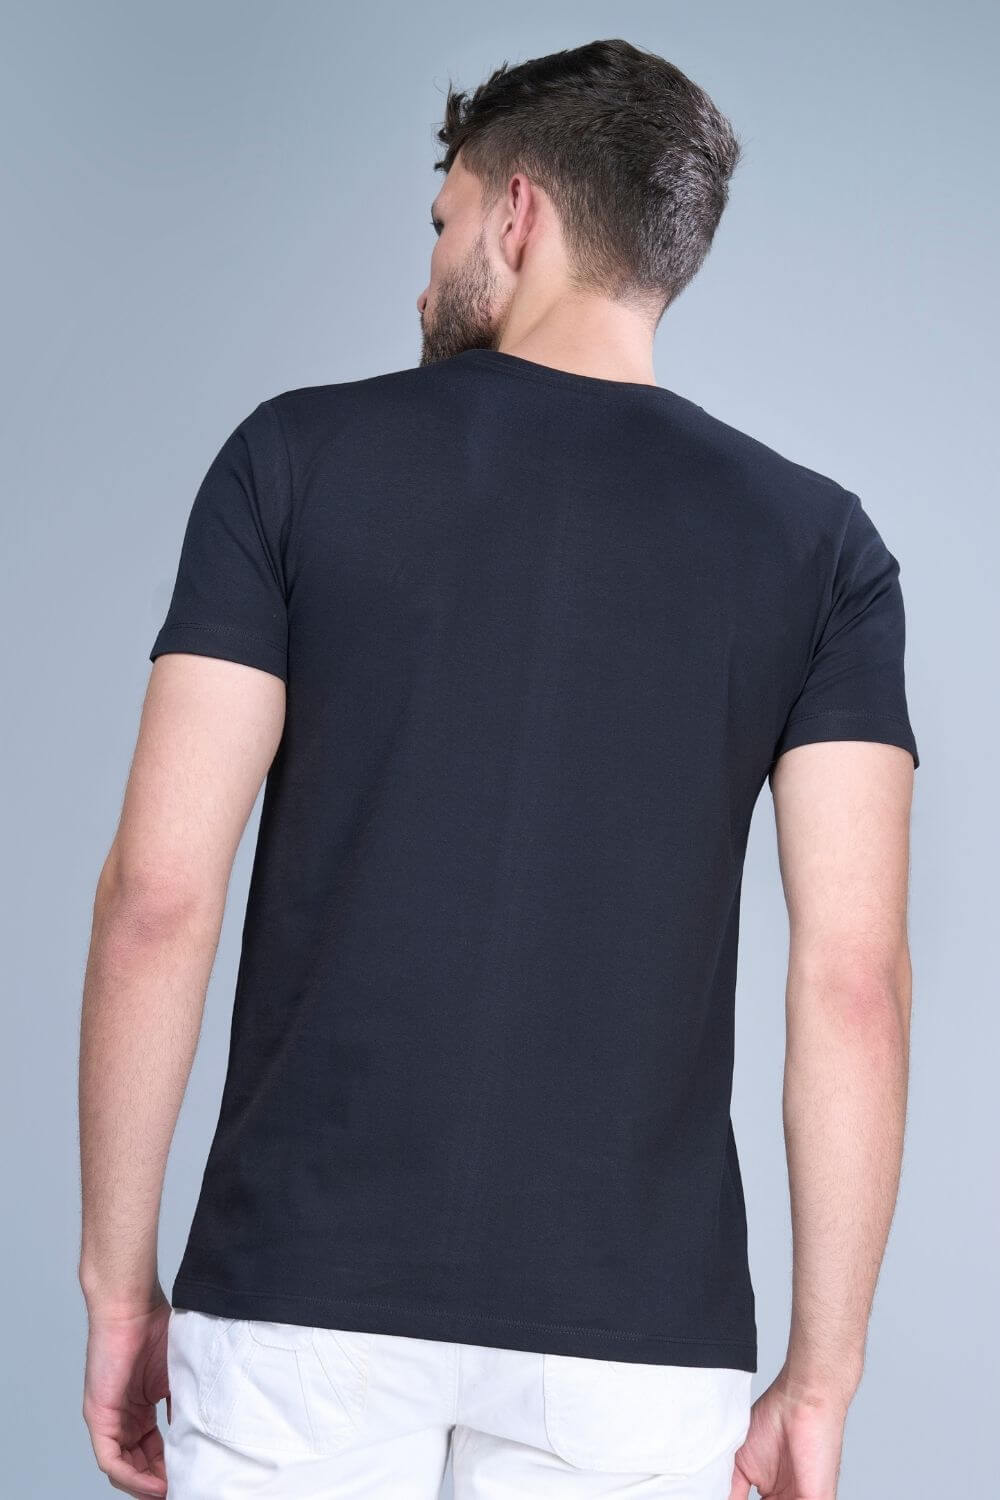 Maxzone Clothing Black - Solid t-shirt